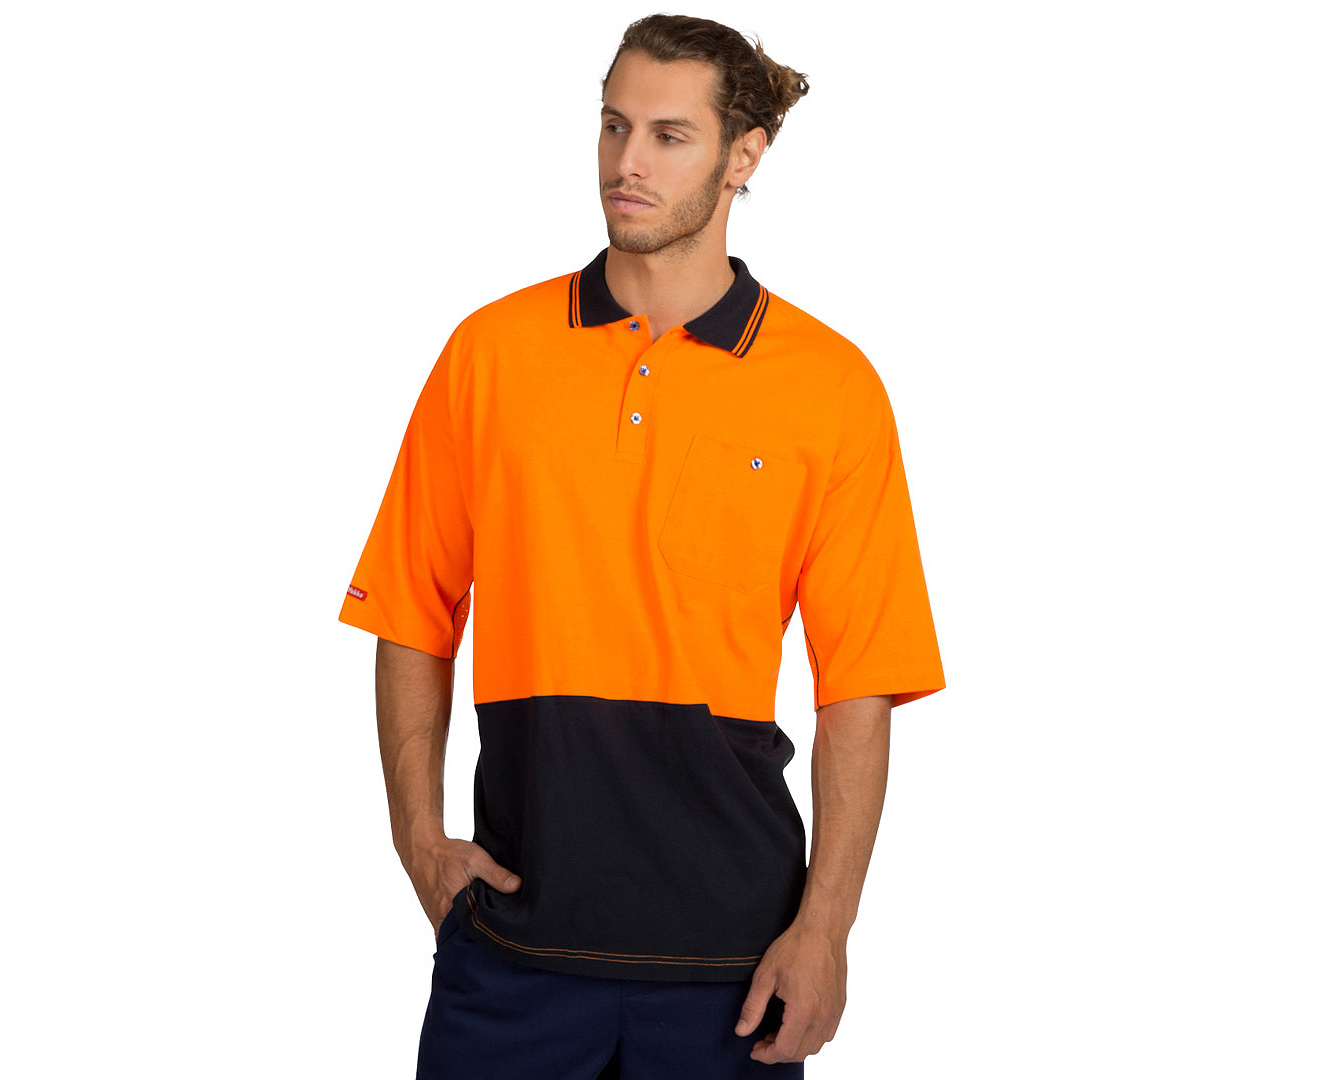 Hard Yakka Men's Size 26 Koolgear Hi-Visibility Cotton Short Sleeve Polo - Orange/Navy